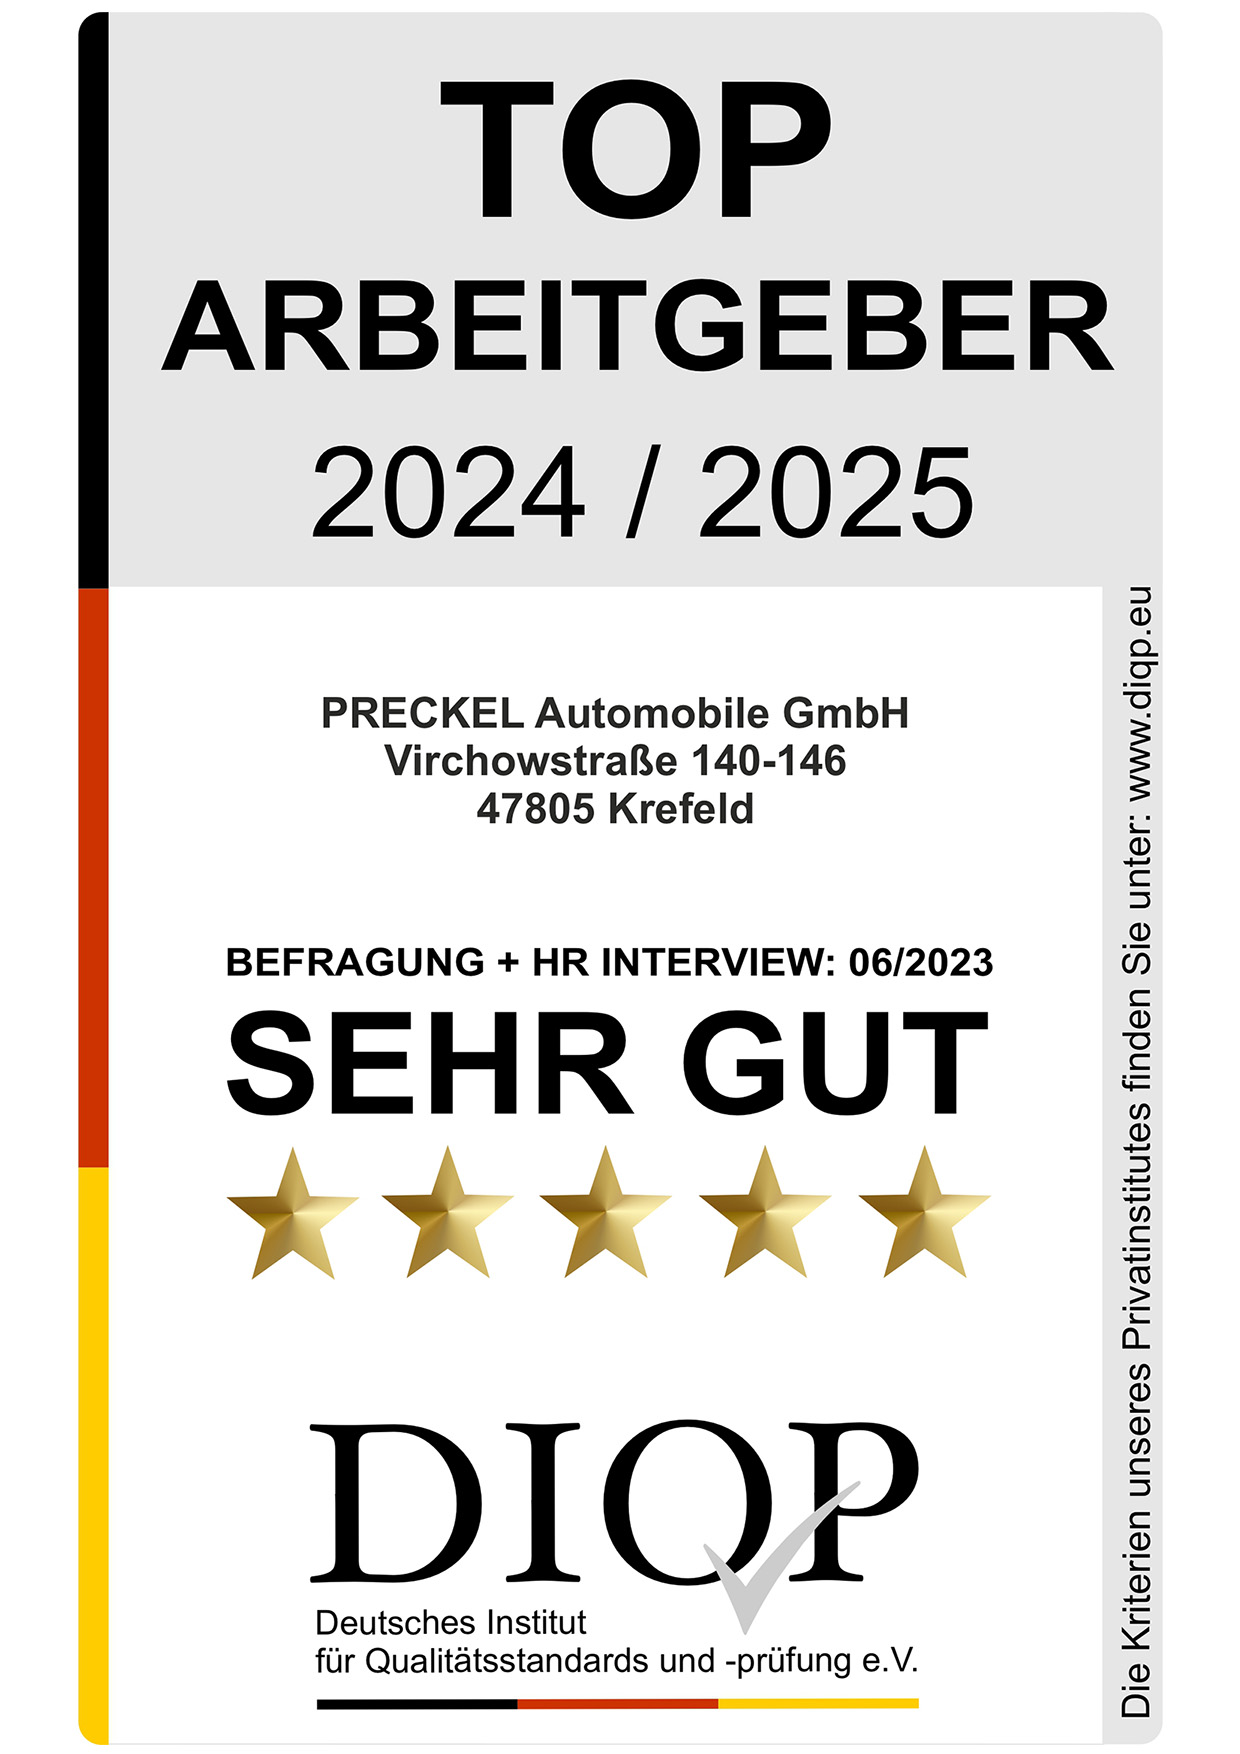 Preckel Automobile GmbH ist Top Arbeitgeber 2024-2025